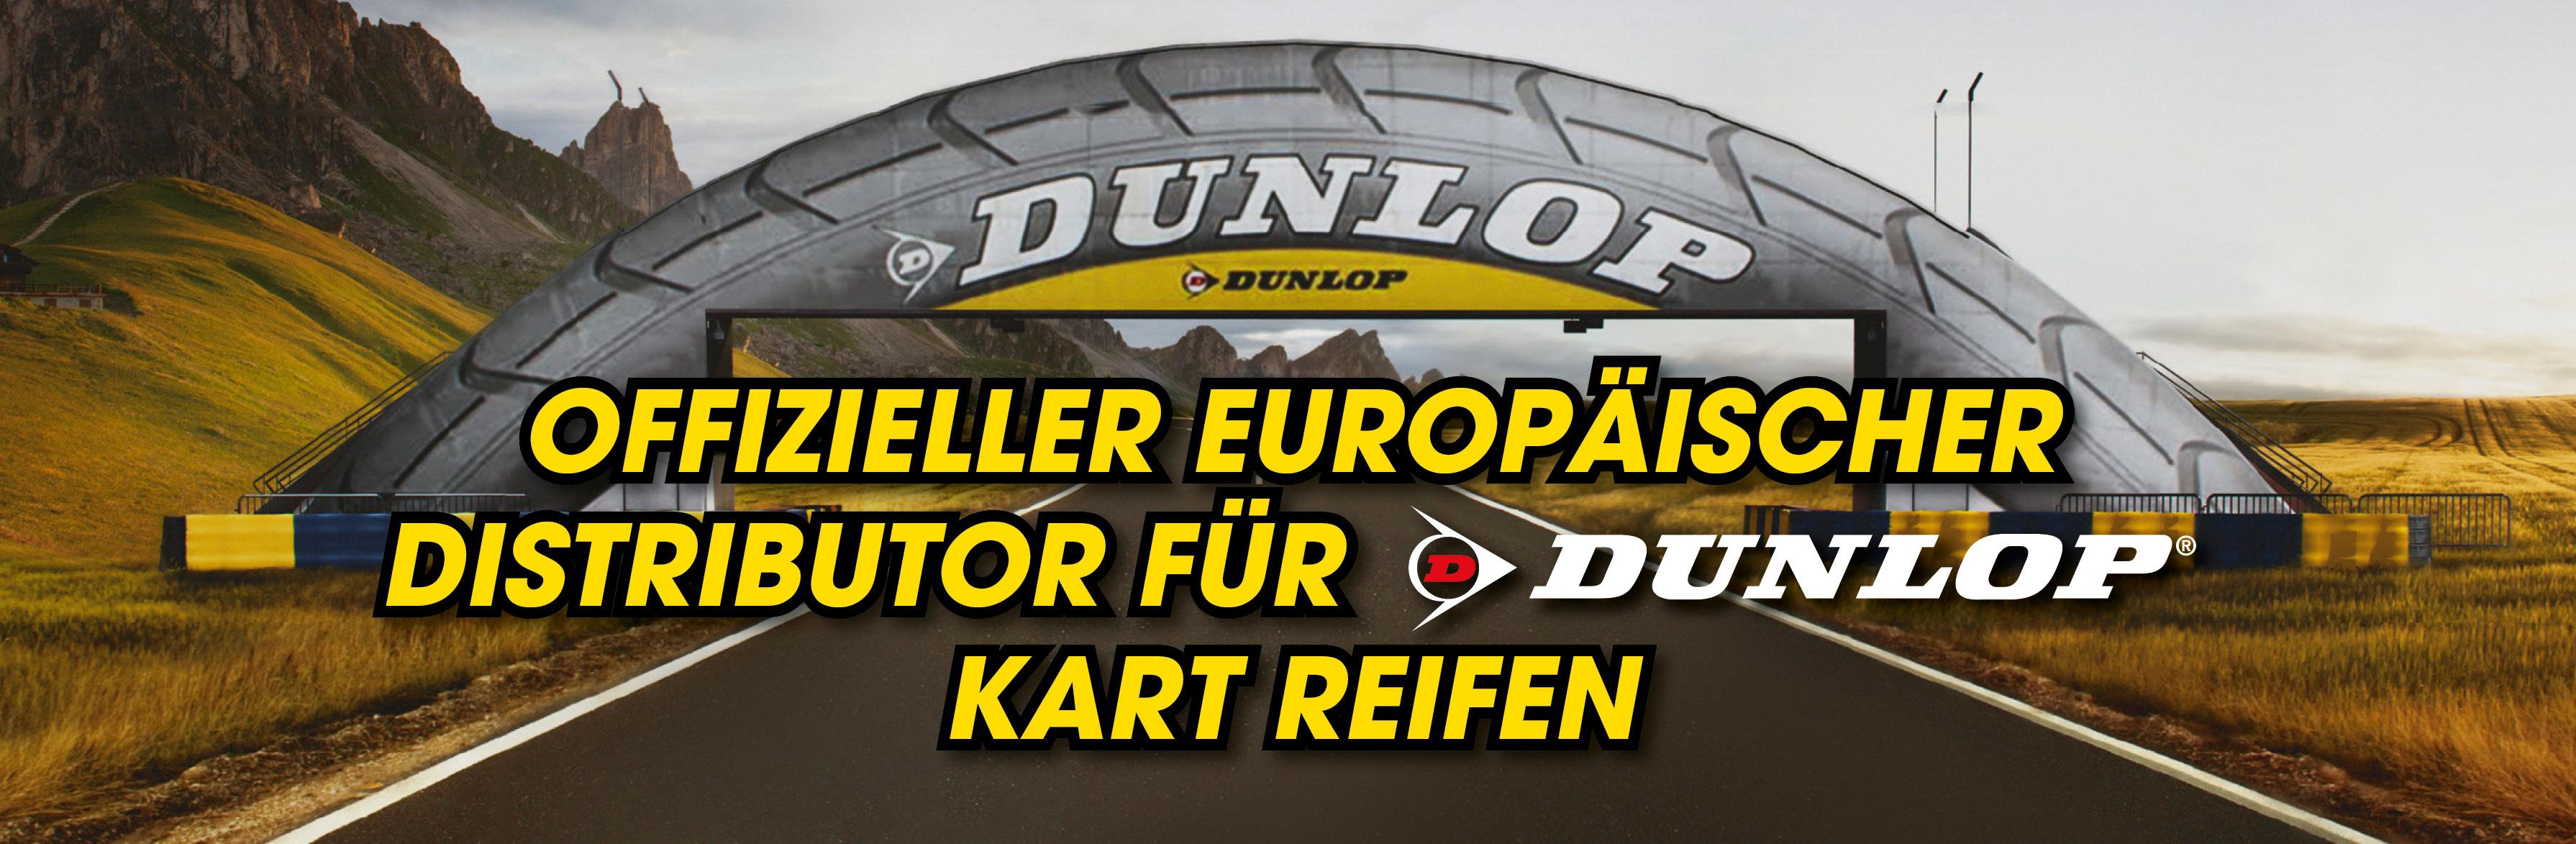 D&M – Official European Distributor for DUNLOP Kart Tires